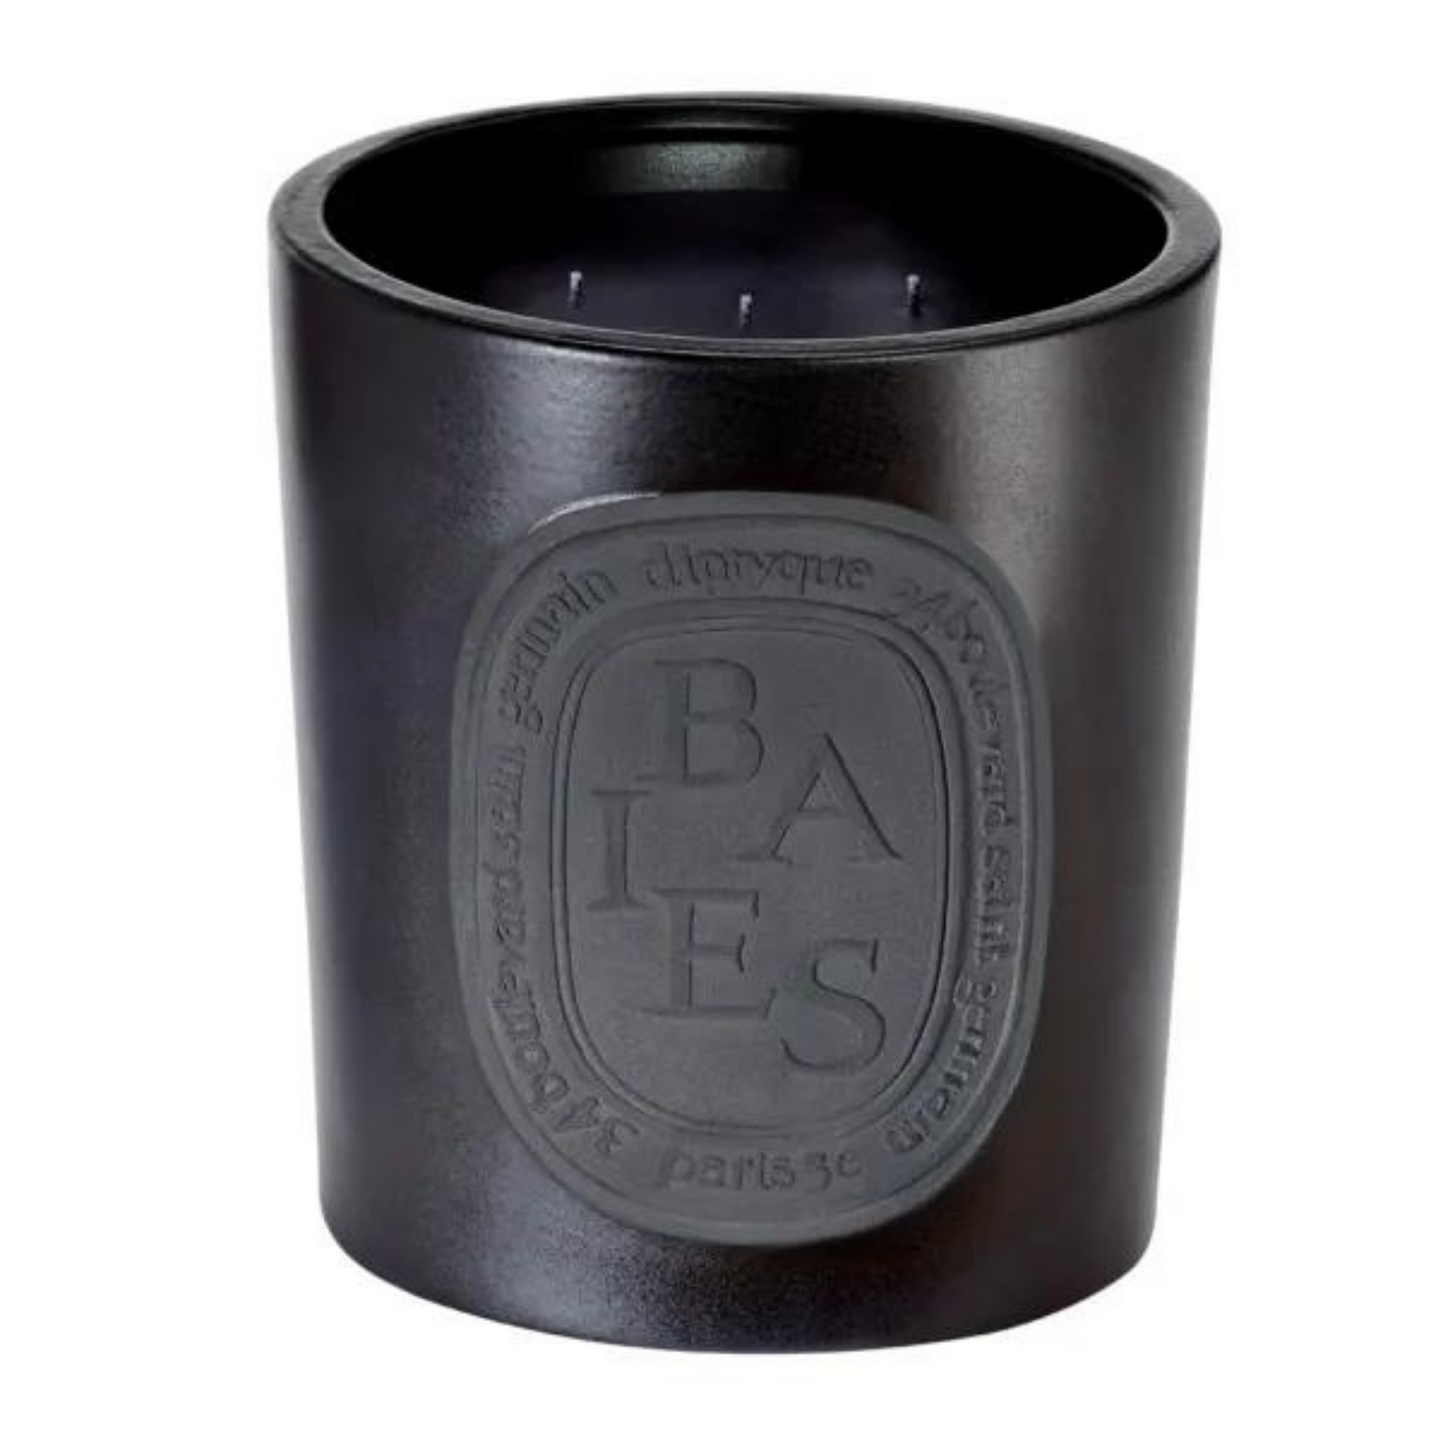 Primary image of Baies (Berries) Ceramic Indoor/Outdoor Candle